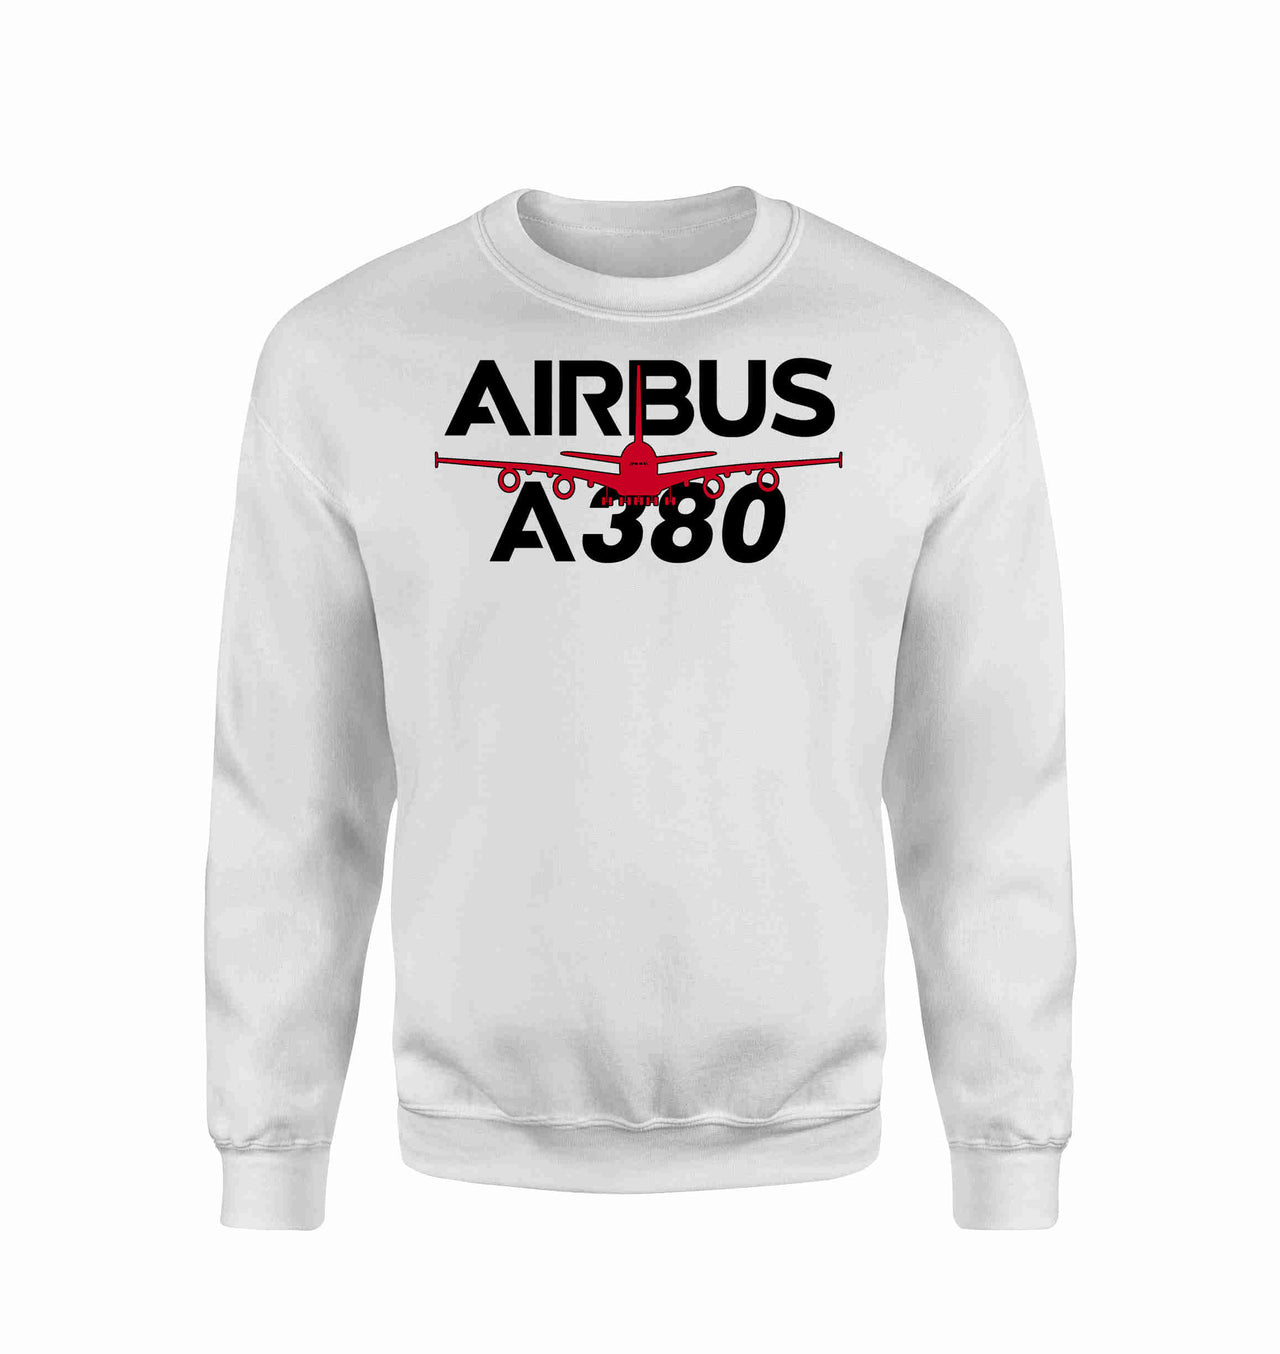 Amazing Airbus A380 Designed Sweatshirts